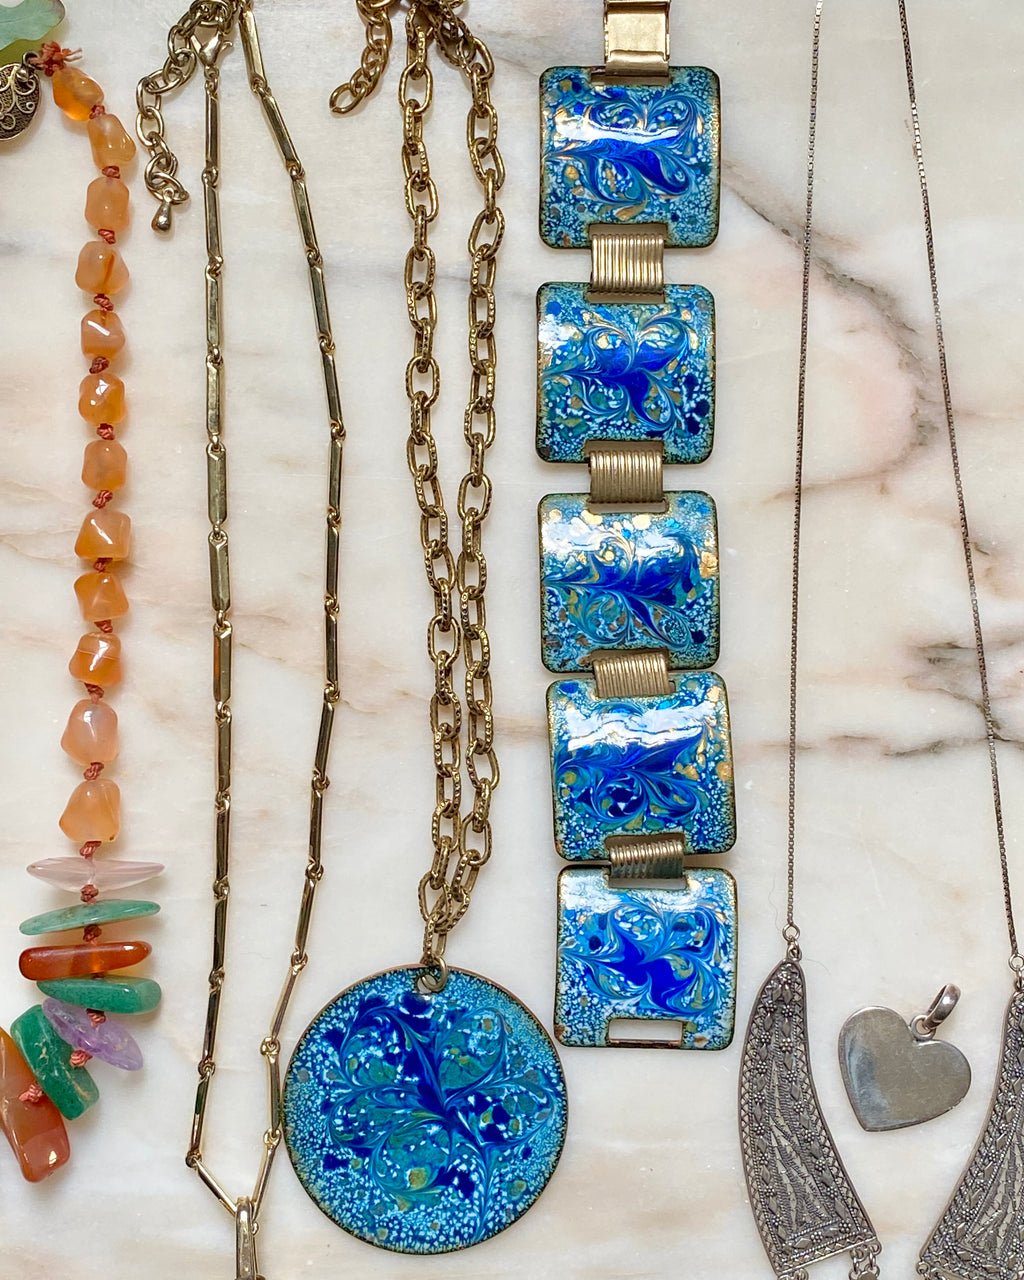 Vintage Mid Century Modernist Blue Enamel Brass Necklace and Bracelet Set